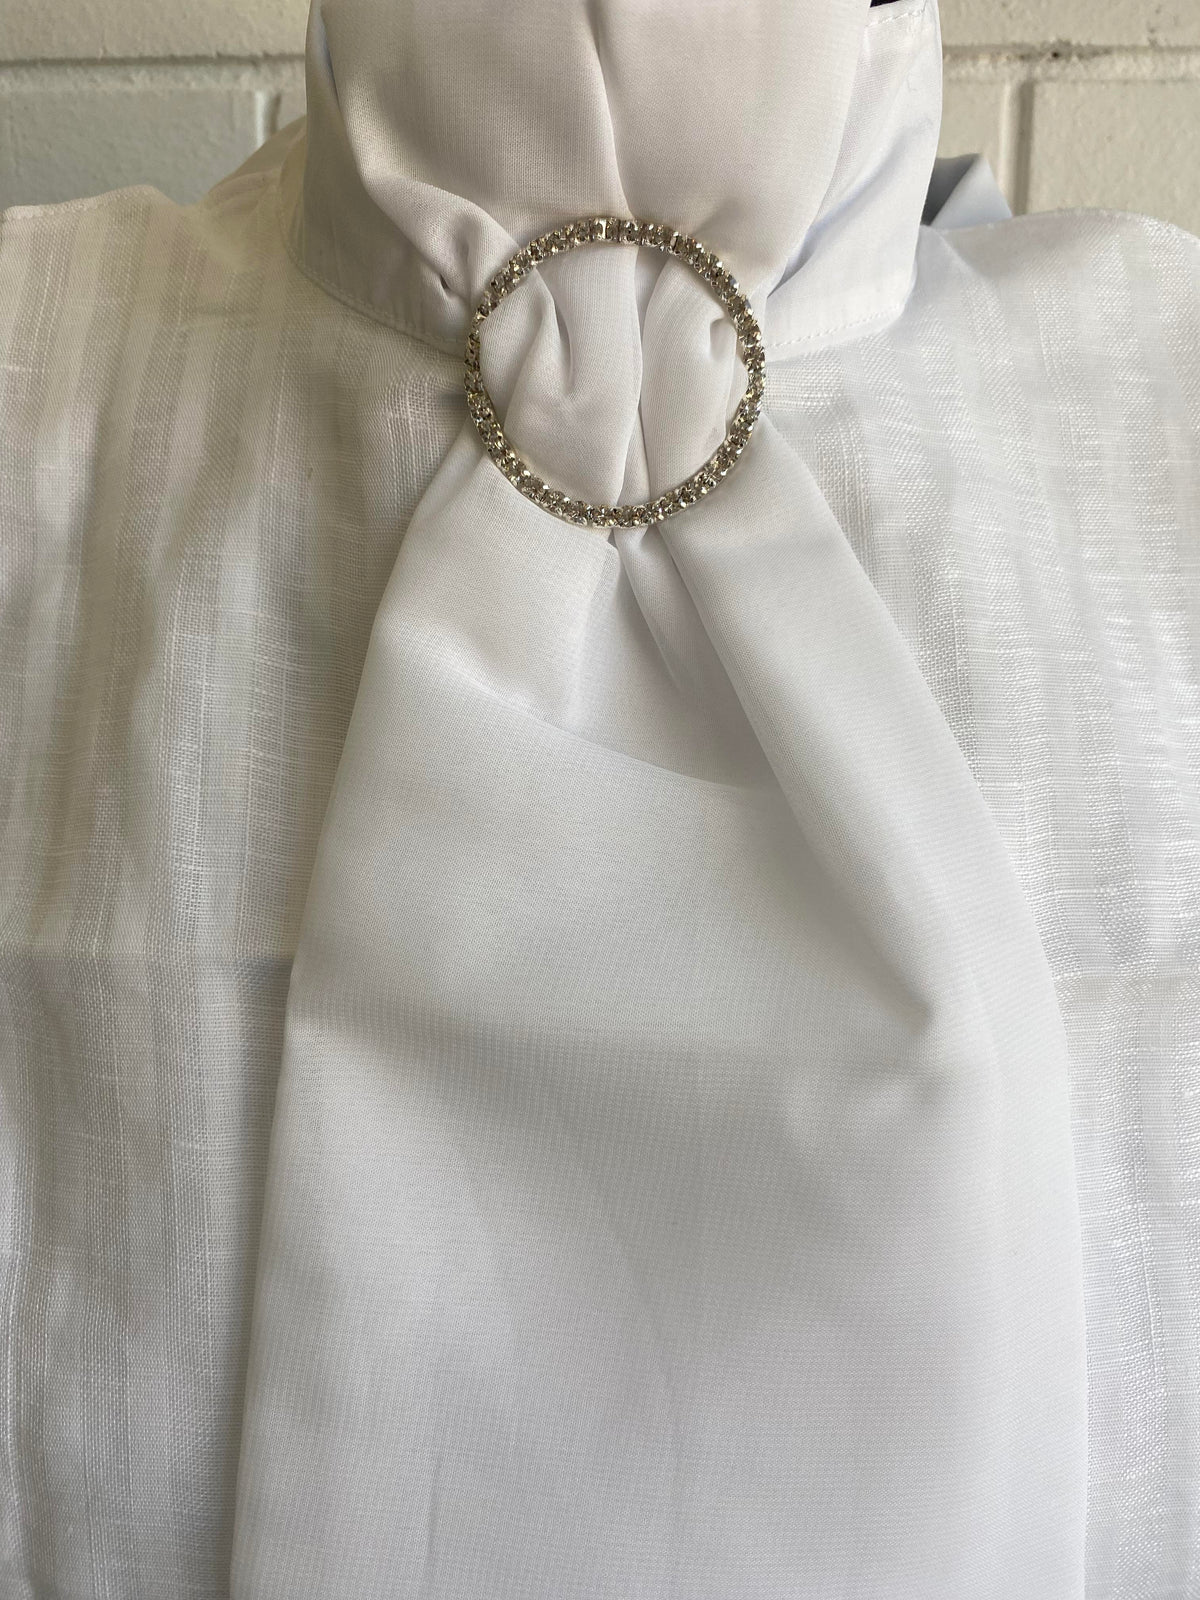 L SHARP Pre-Tied Bib Stock Tie White with Diamanté Ring